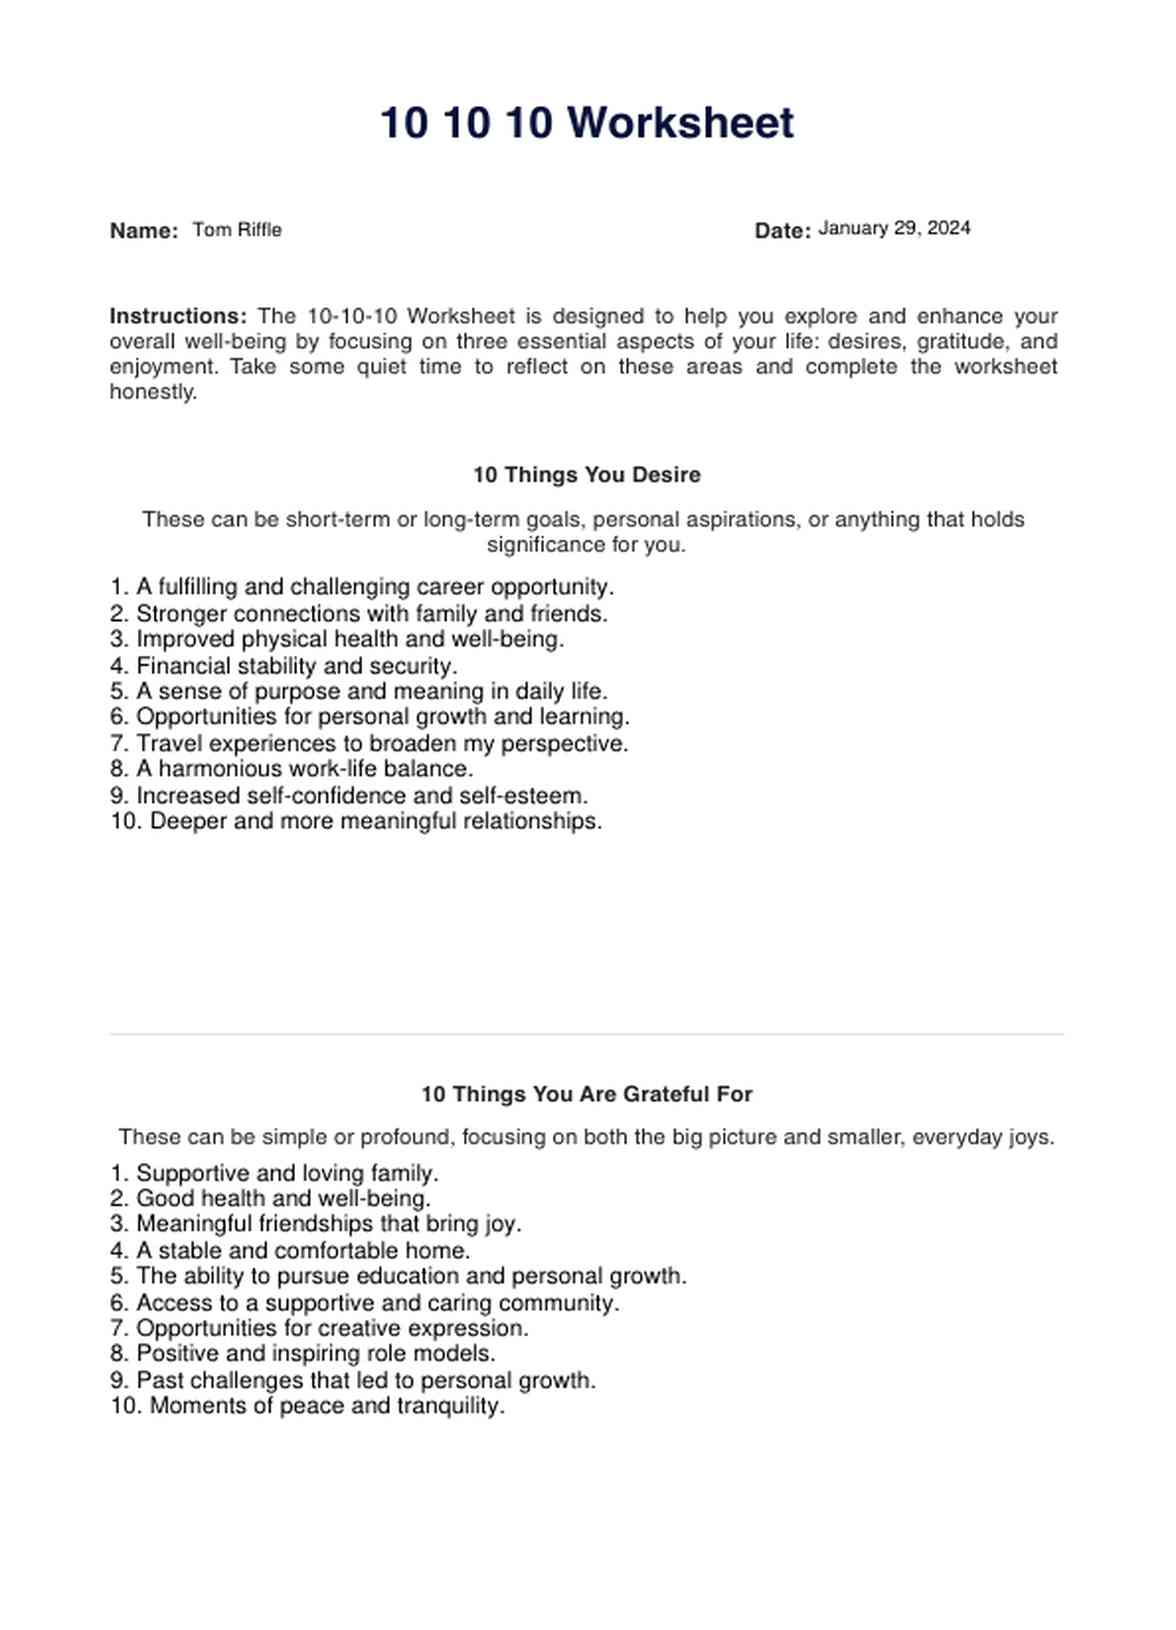 10 10 10 Worksheet PDF Example